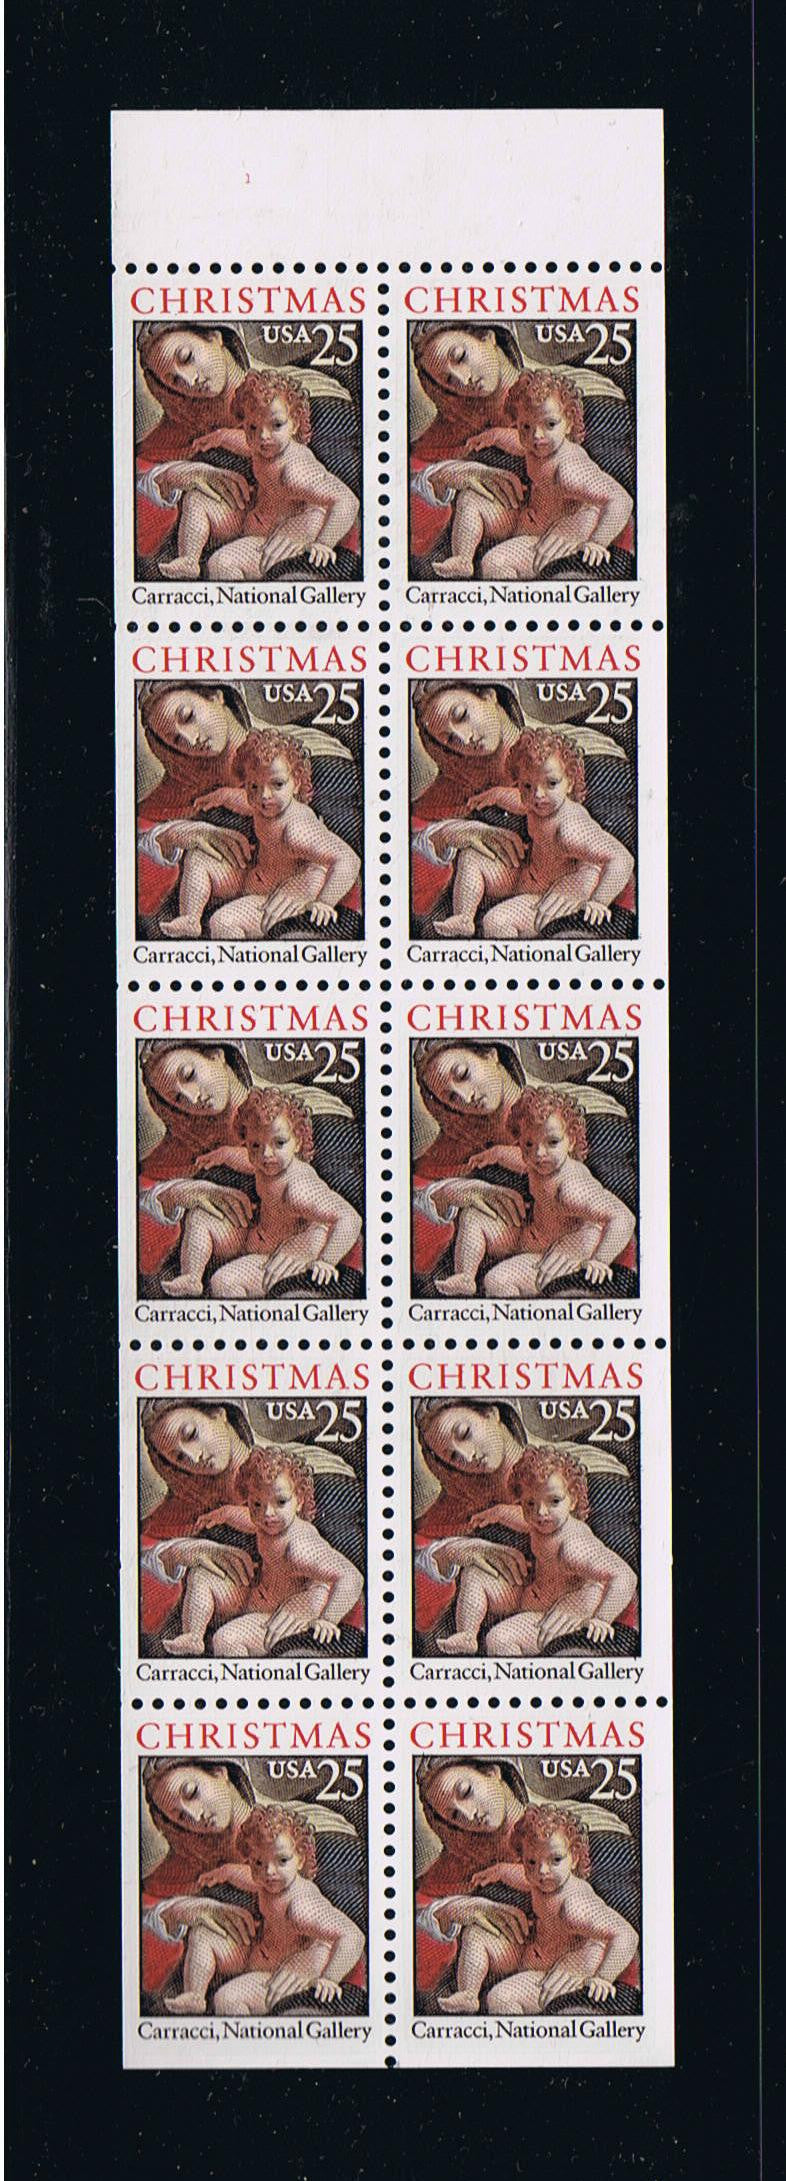 # 2427a (1989) Madonna and Child, NF - Bklt pane, #1, MNH